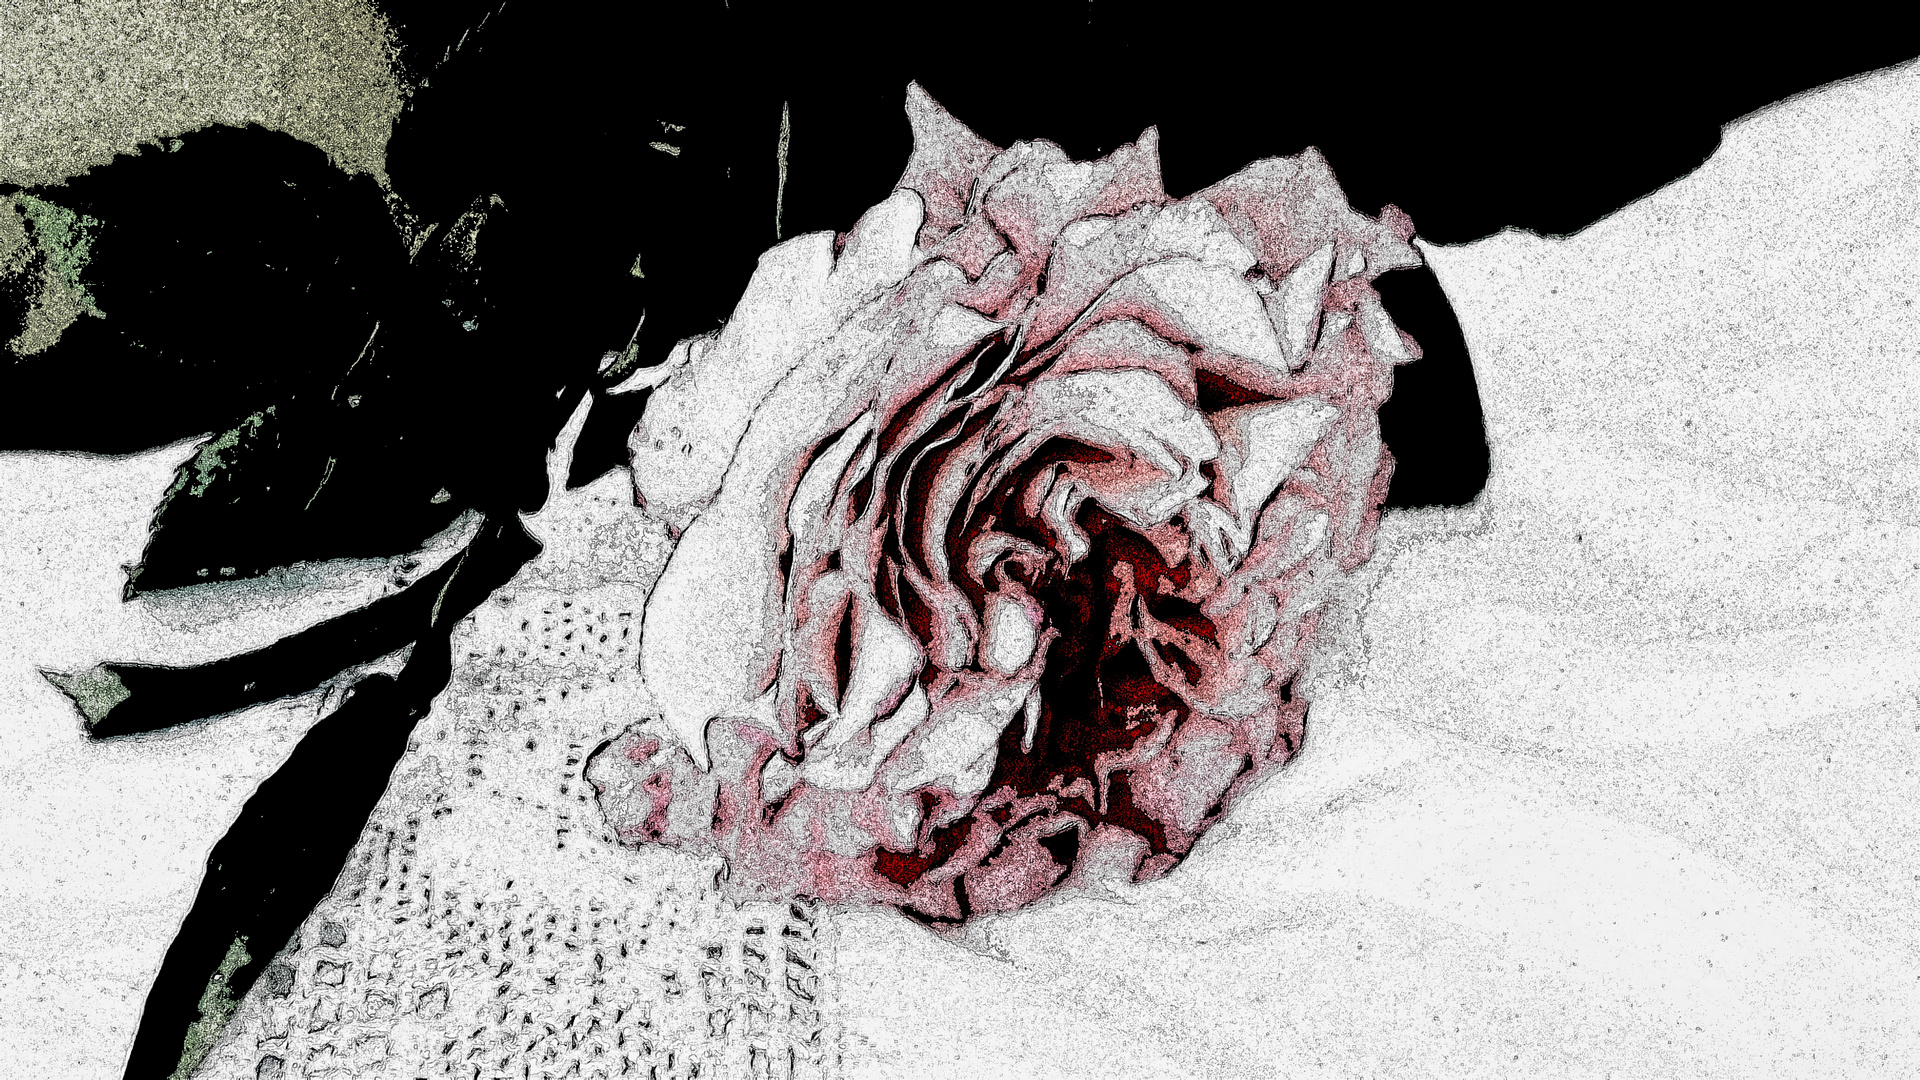 the last rose ... '20